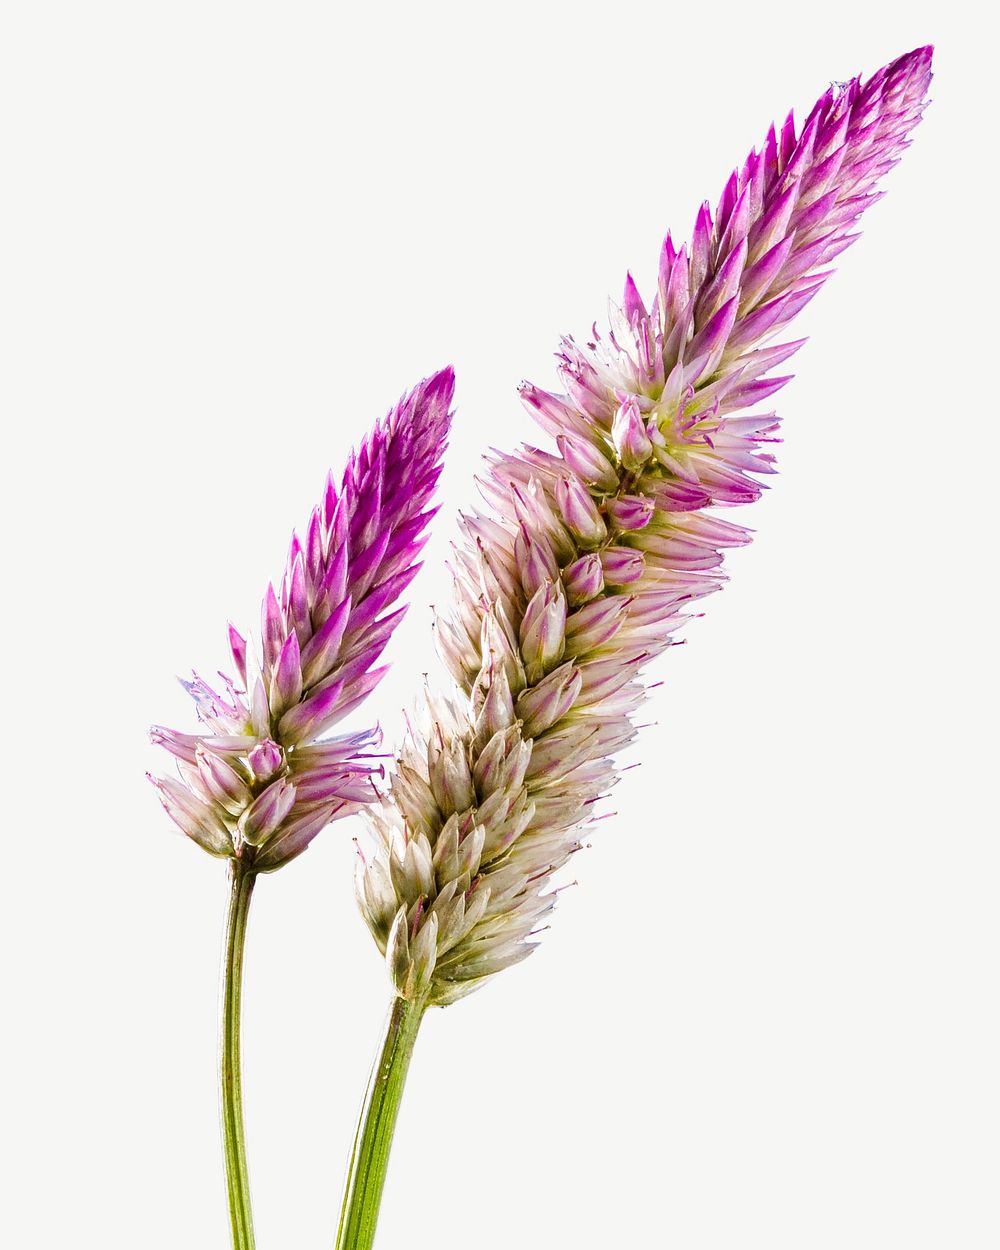 Ptilotus Exaltatus flower collage element, isolated image psd